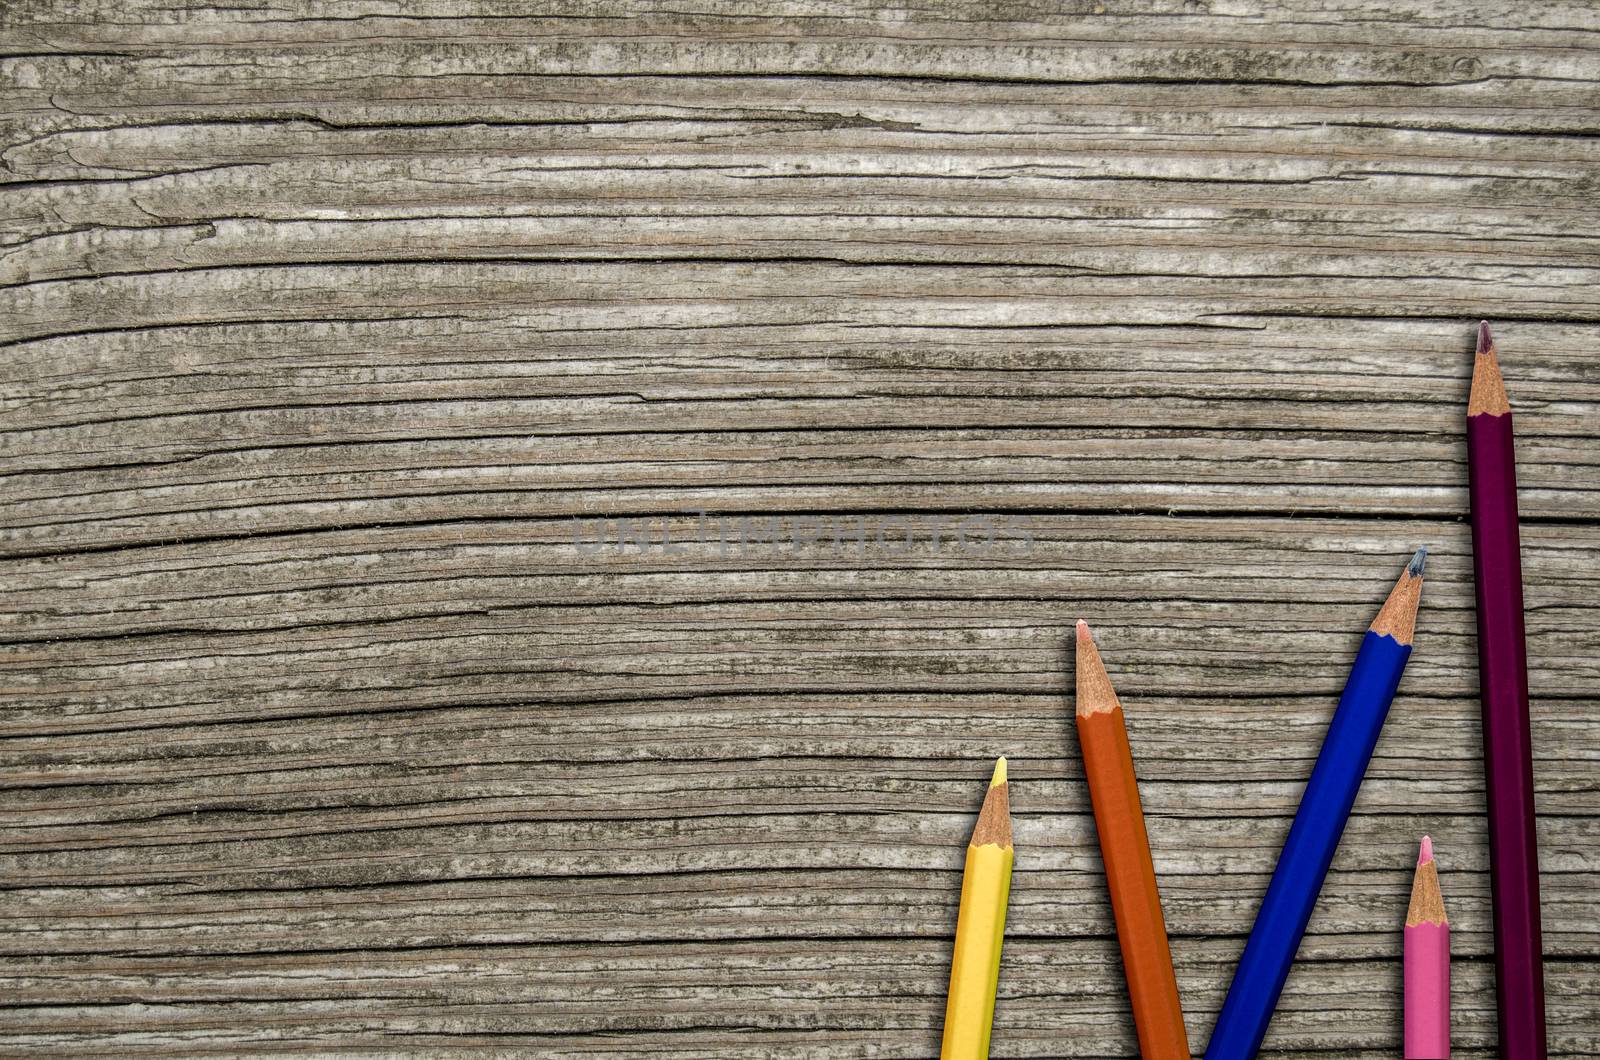 Wooden School Desk And Pencils by mrdoomits